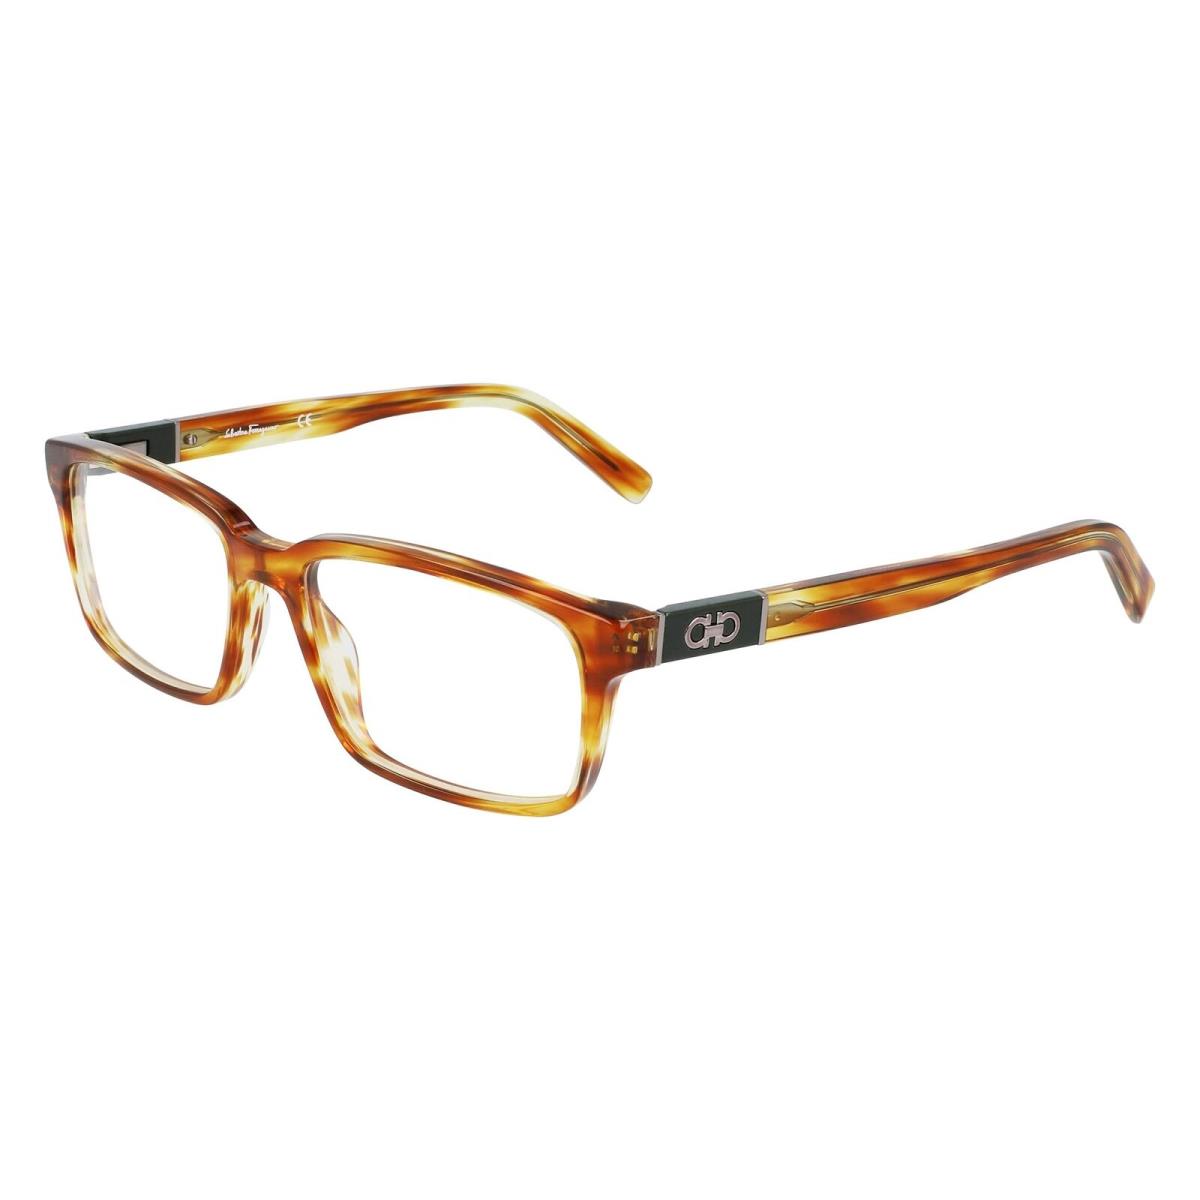 Salvatore Ferragamo SF 2772 216 Striped Brown Eyeglasses 57/17/145 with Case